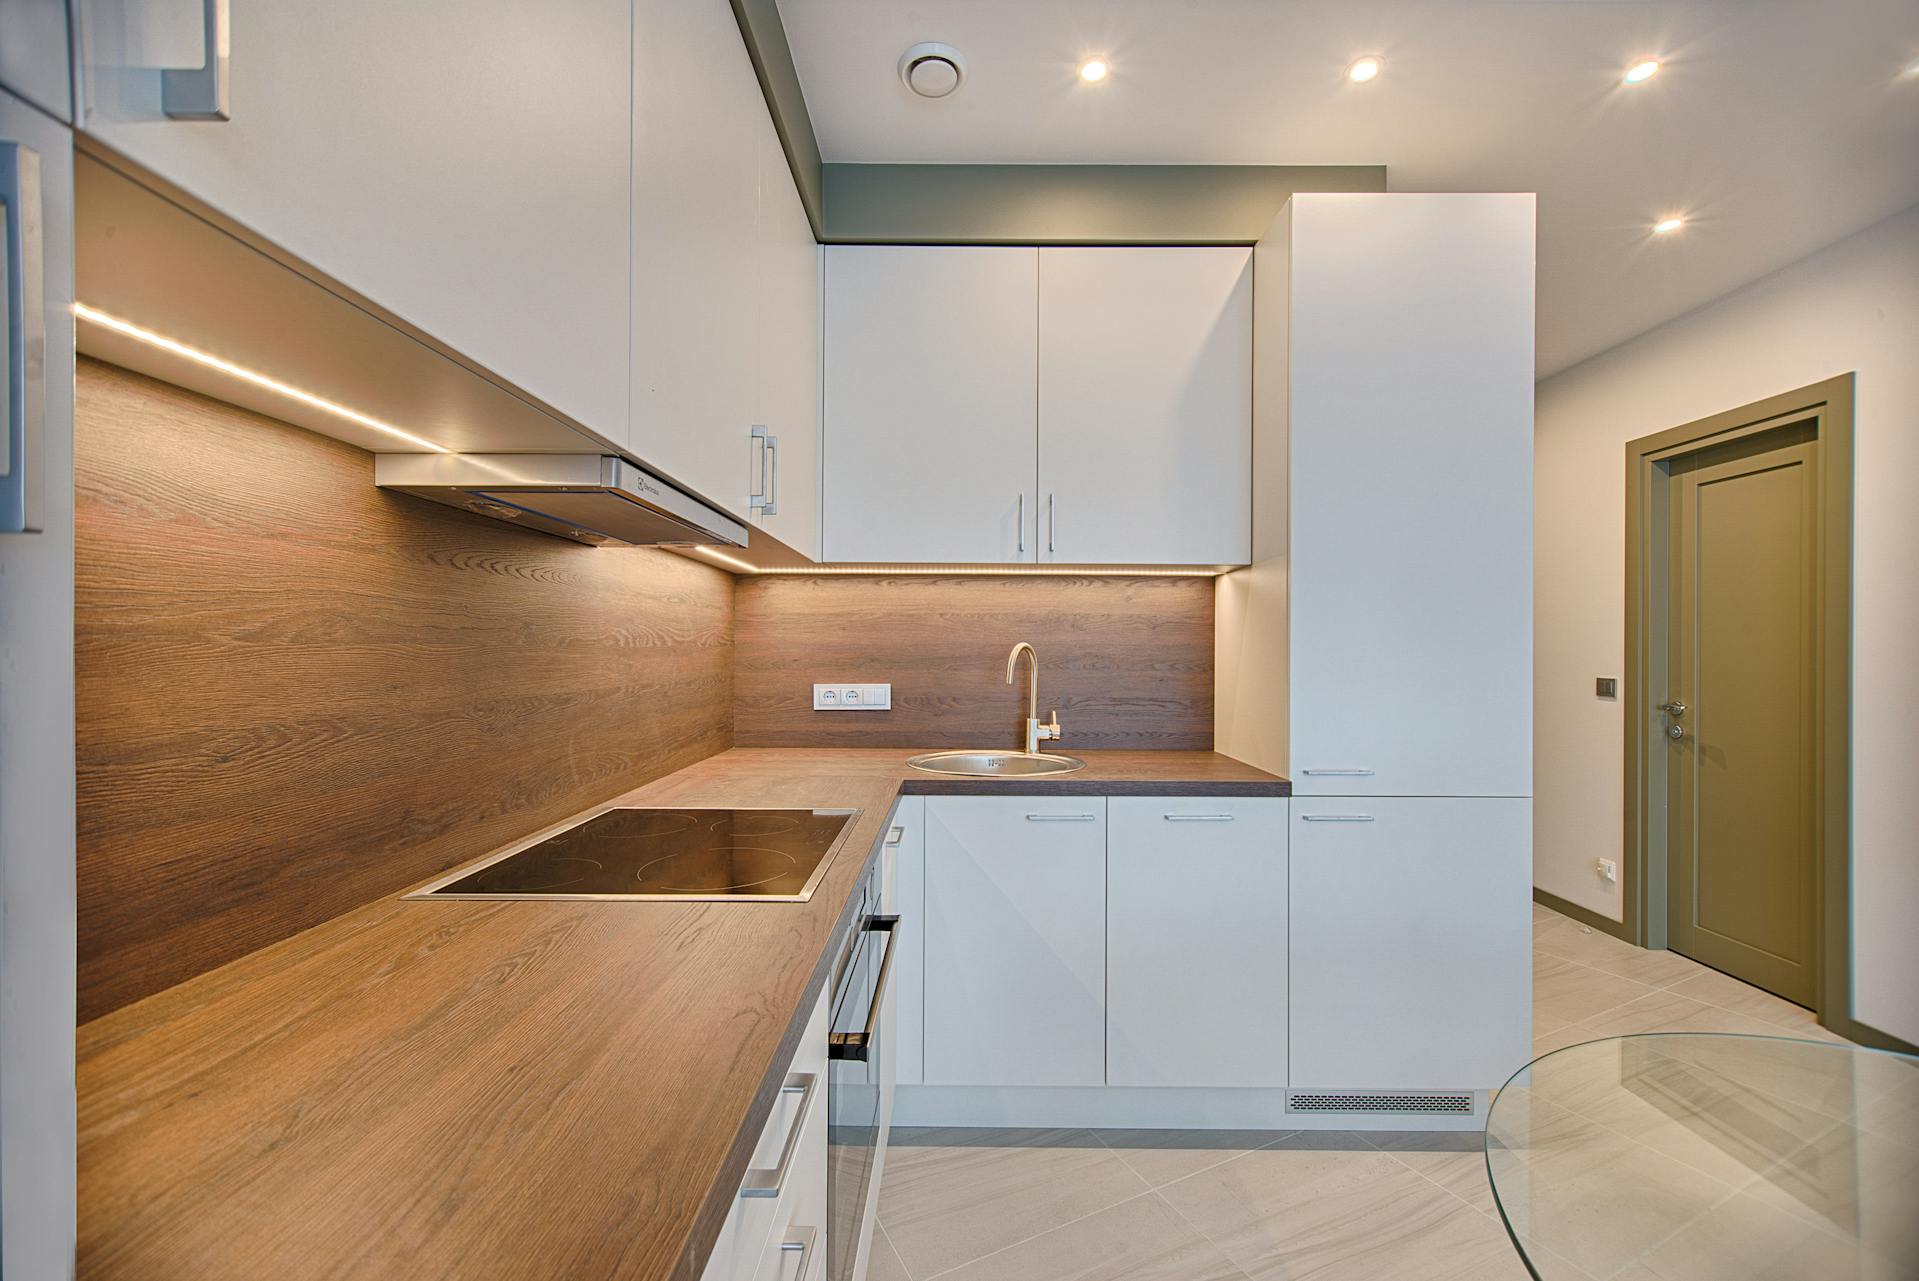 An empty apartment kitchen | Source: Pexels